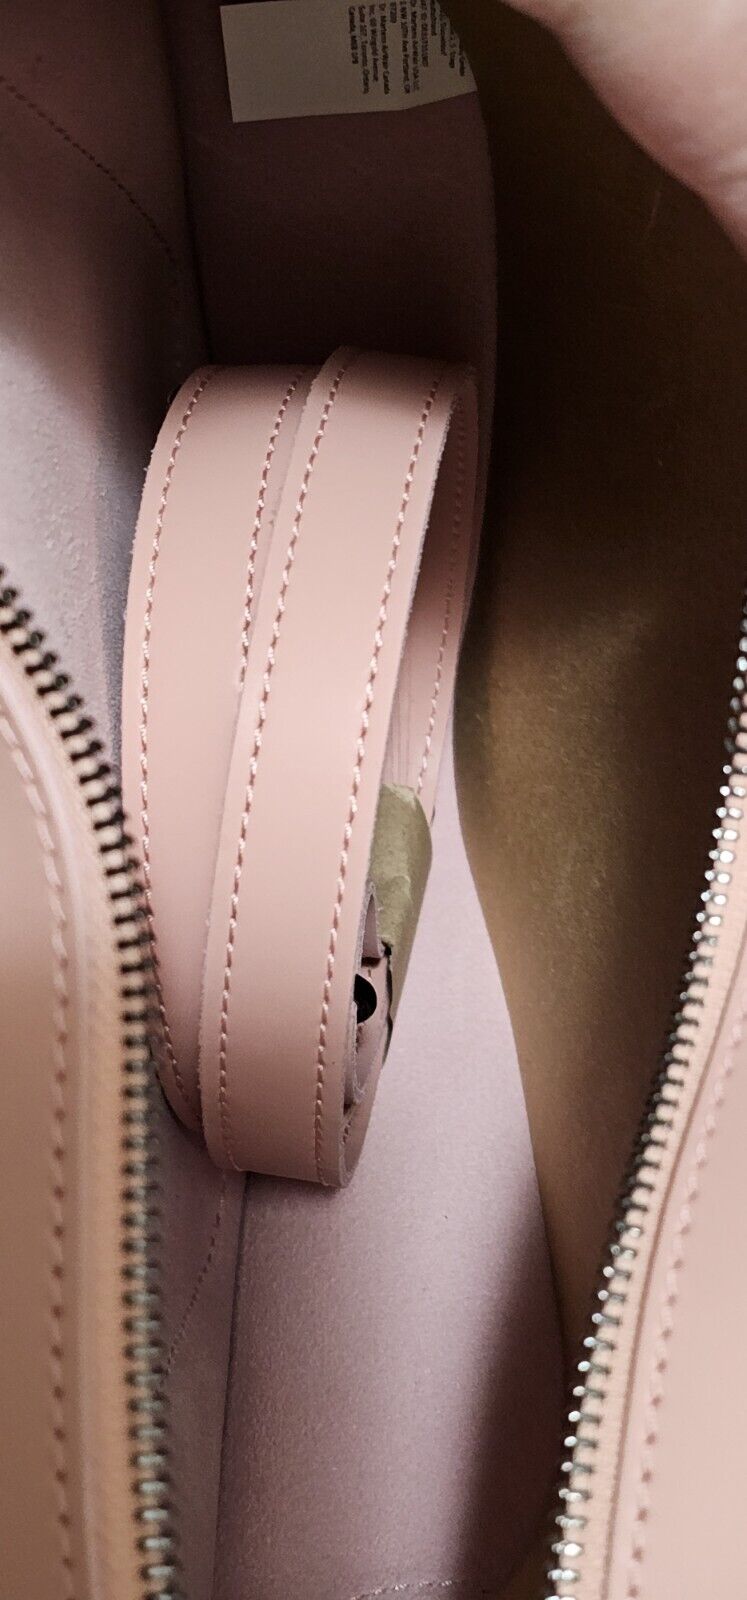 Dr. Martens Heart Shaped Leather Backpack Cross Bag Handbag Purse Peach Pink